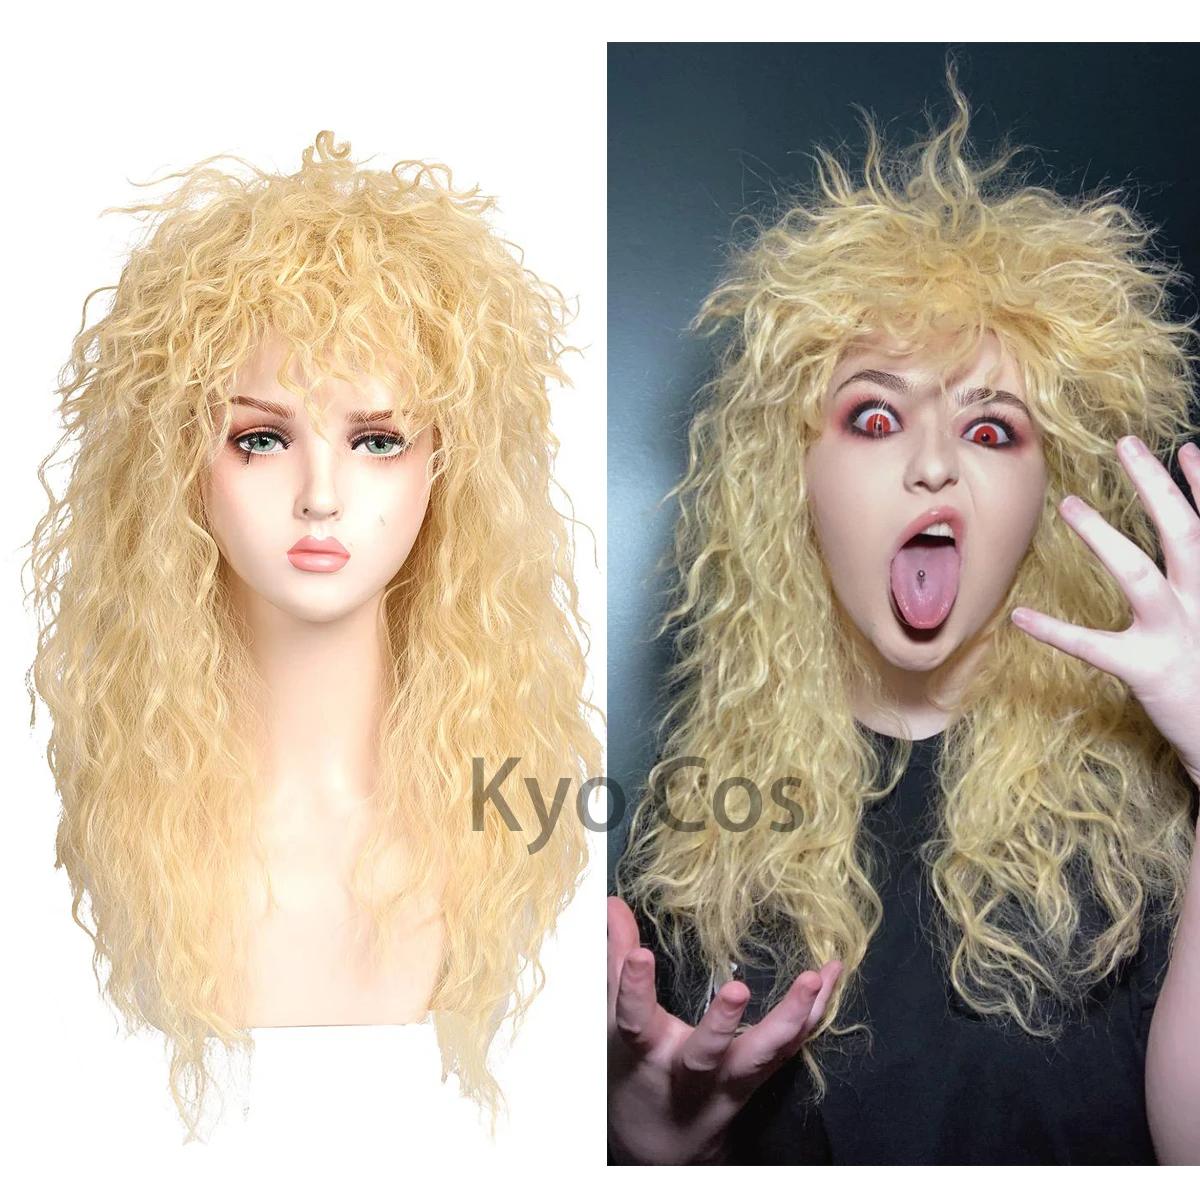 

Kyo 70 80s Black Curly Blonde Rocker Cosplay Wig For Halloween Disco Mullet Wig for Men